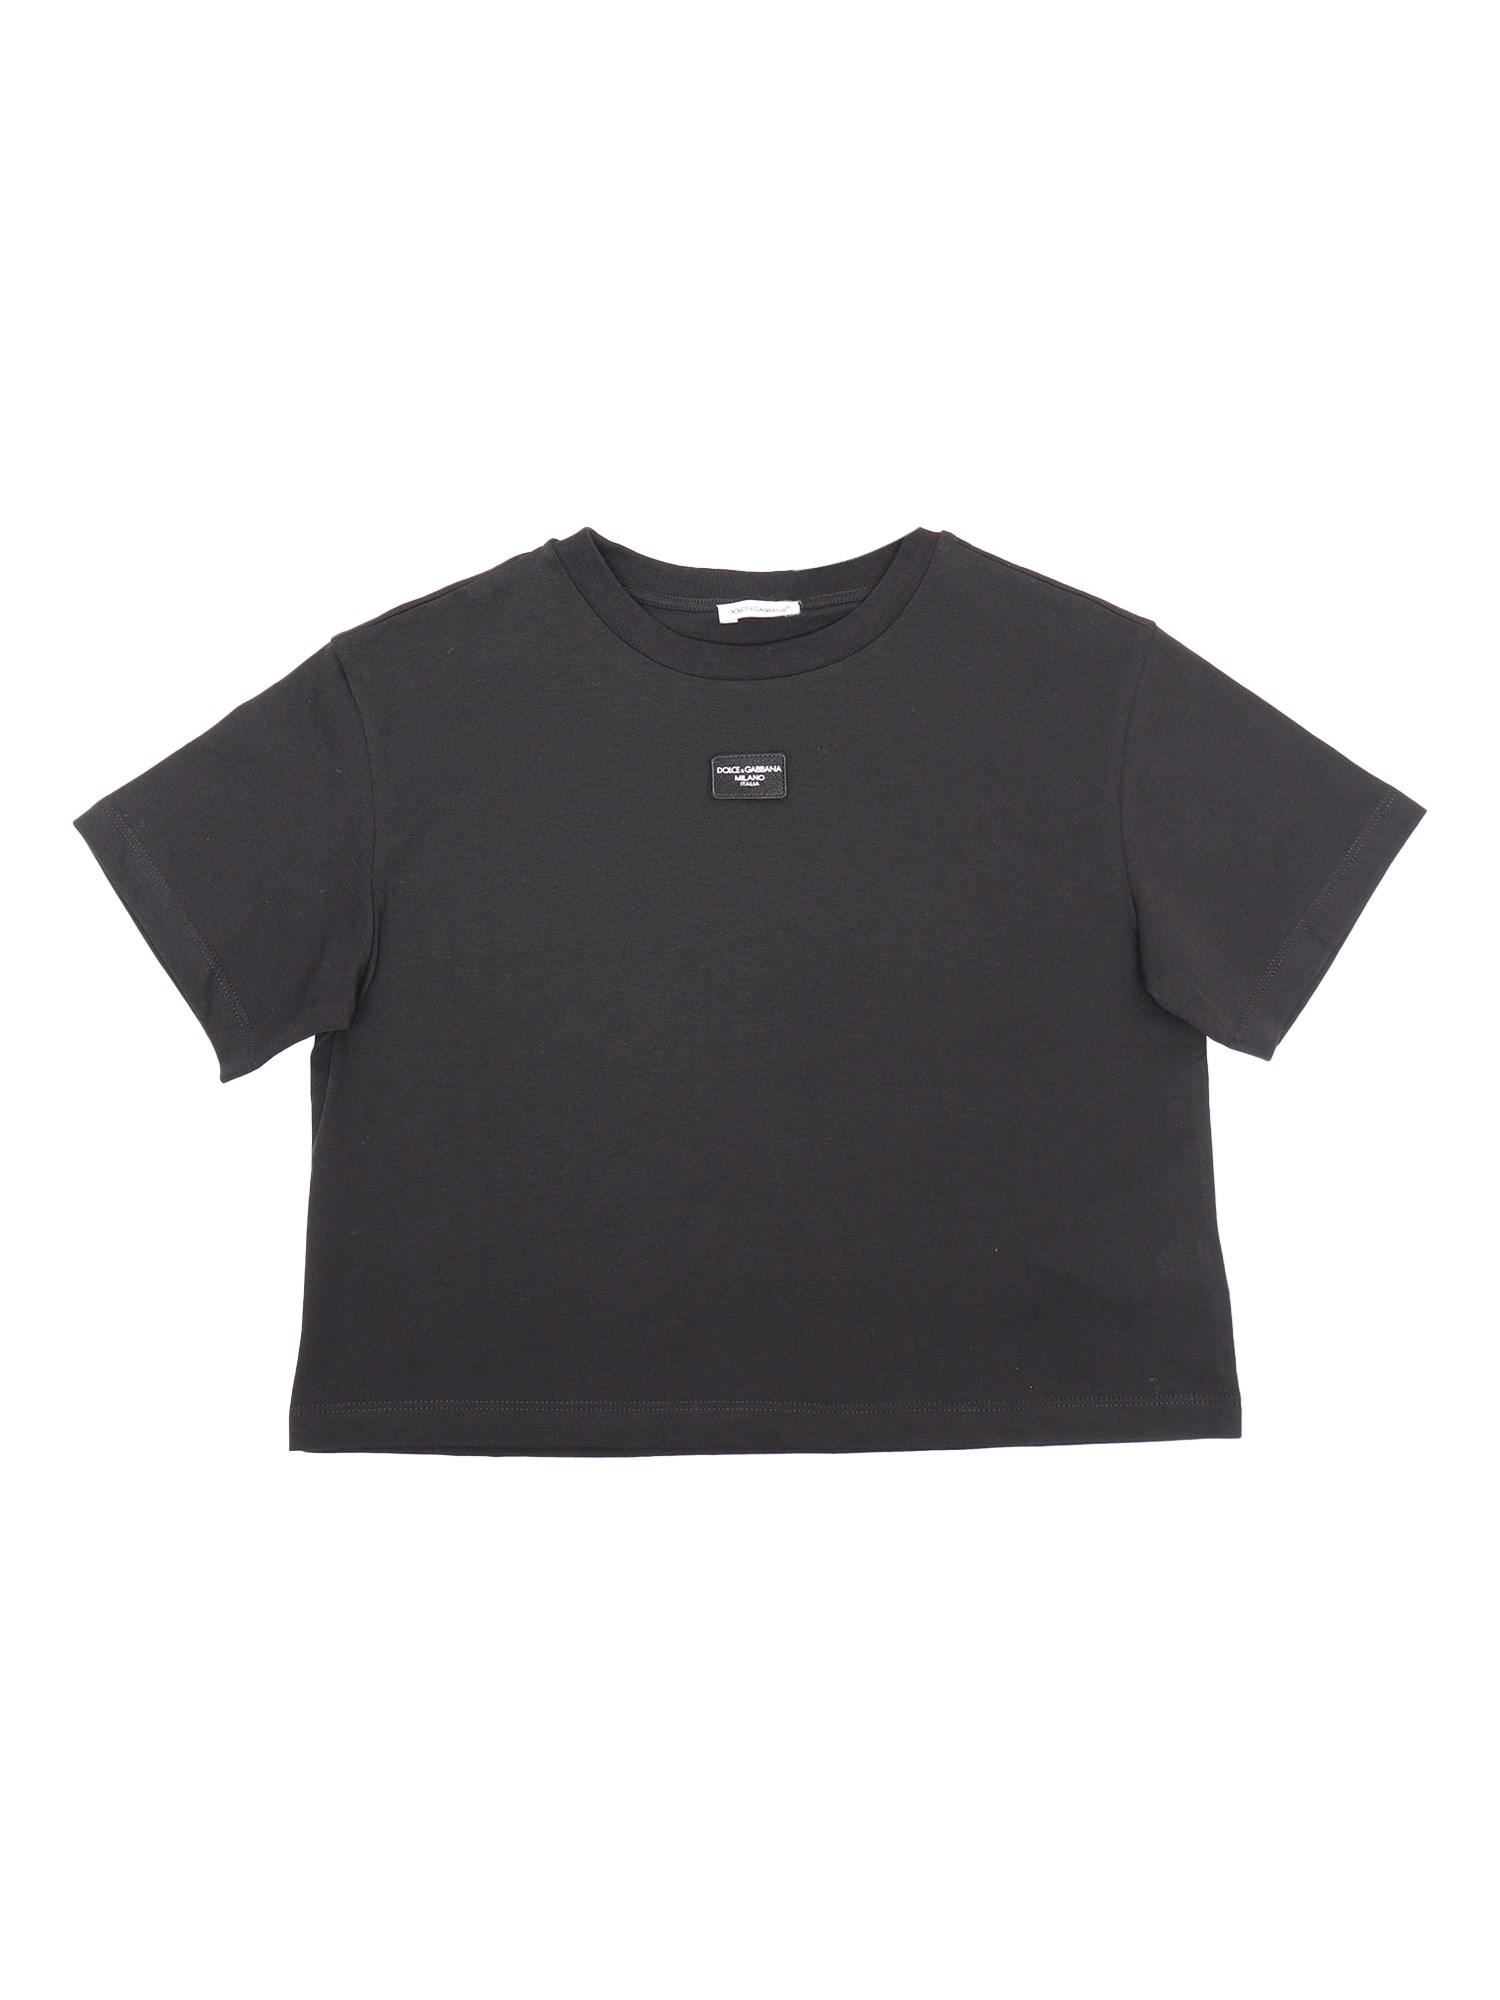 Dolce & Gabbana Junior D&g Black Cropped T-shirt